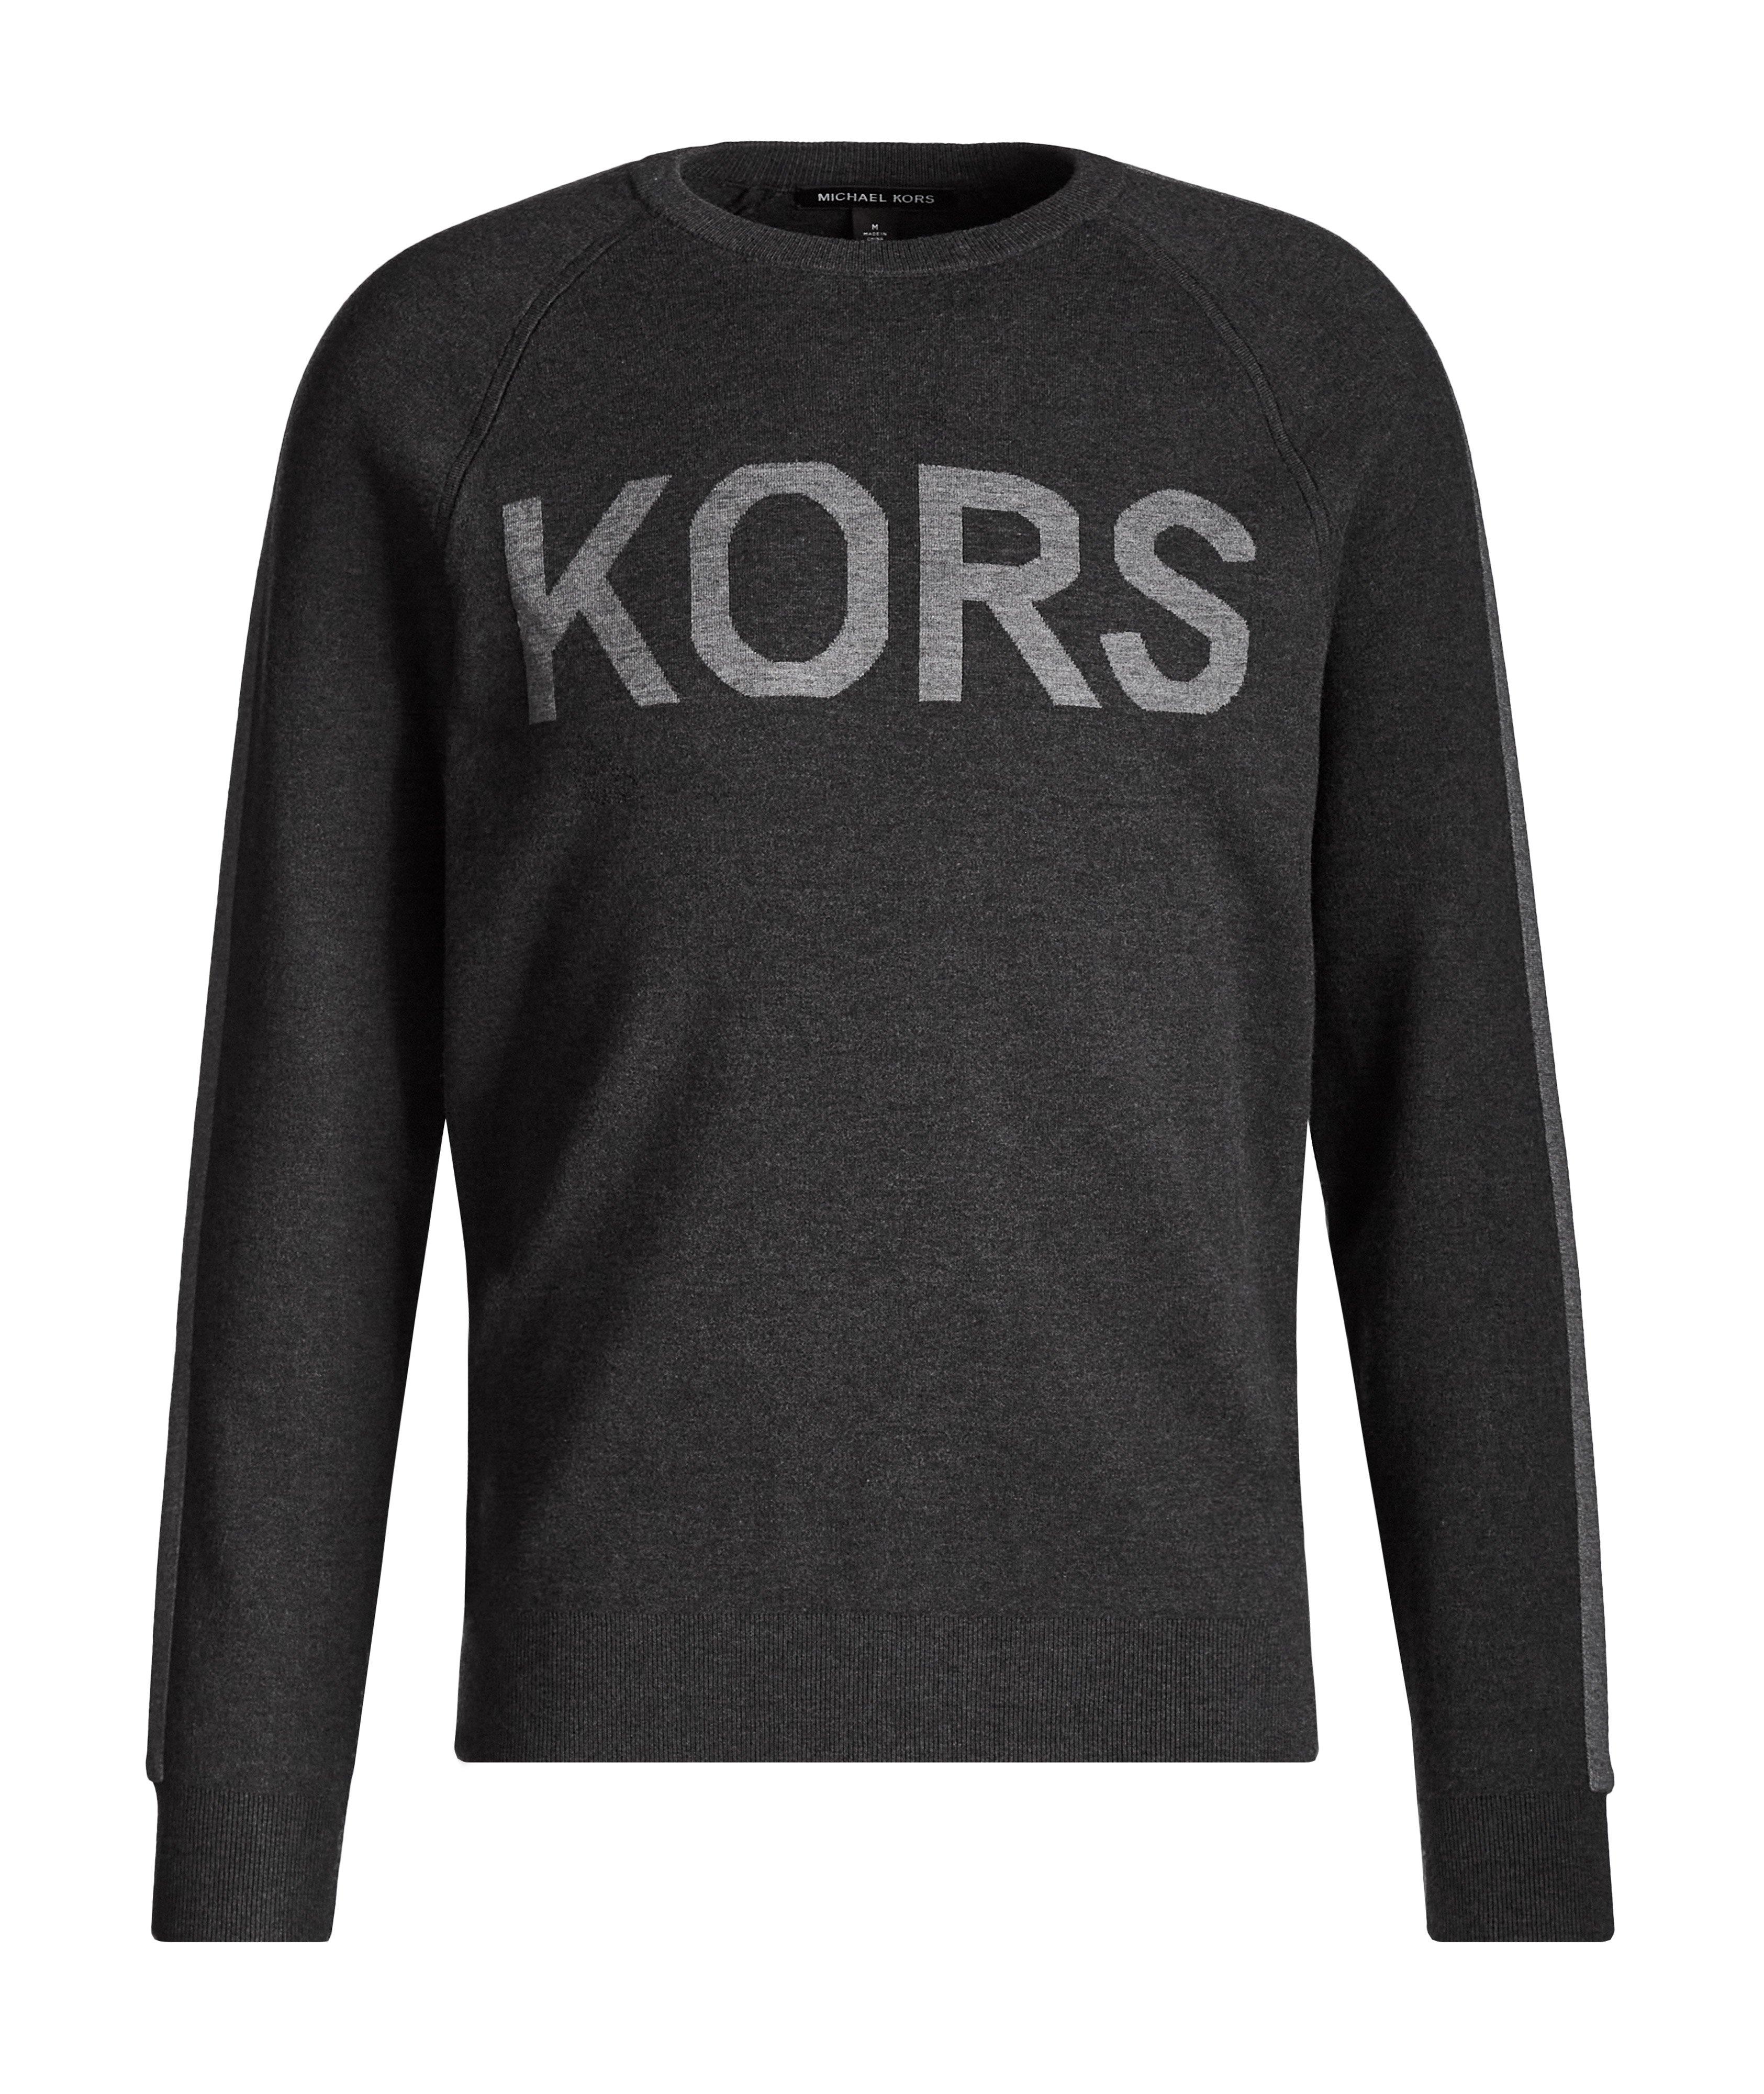 Michael Kors Printed Jersey Stretch Sweatshirt | Sweaters & Knits ...